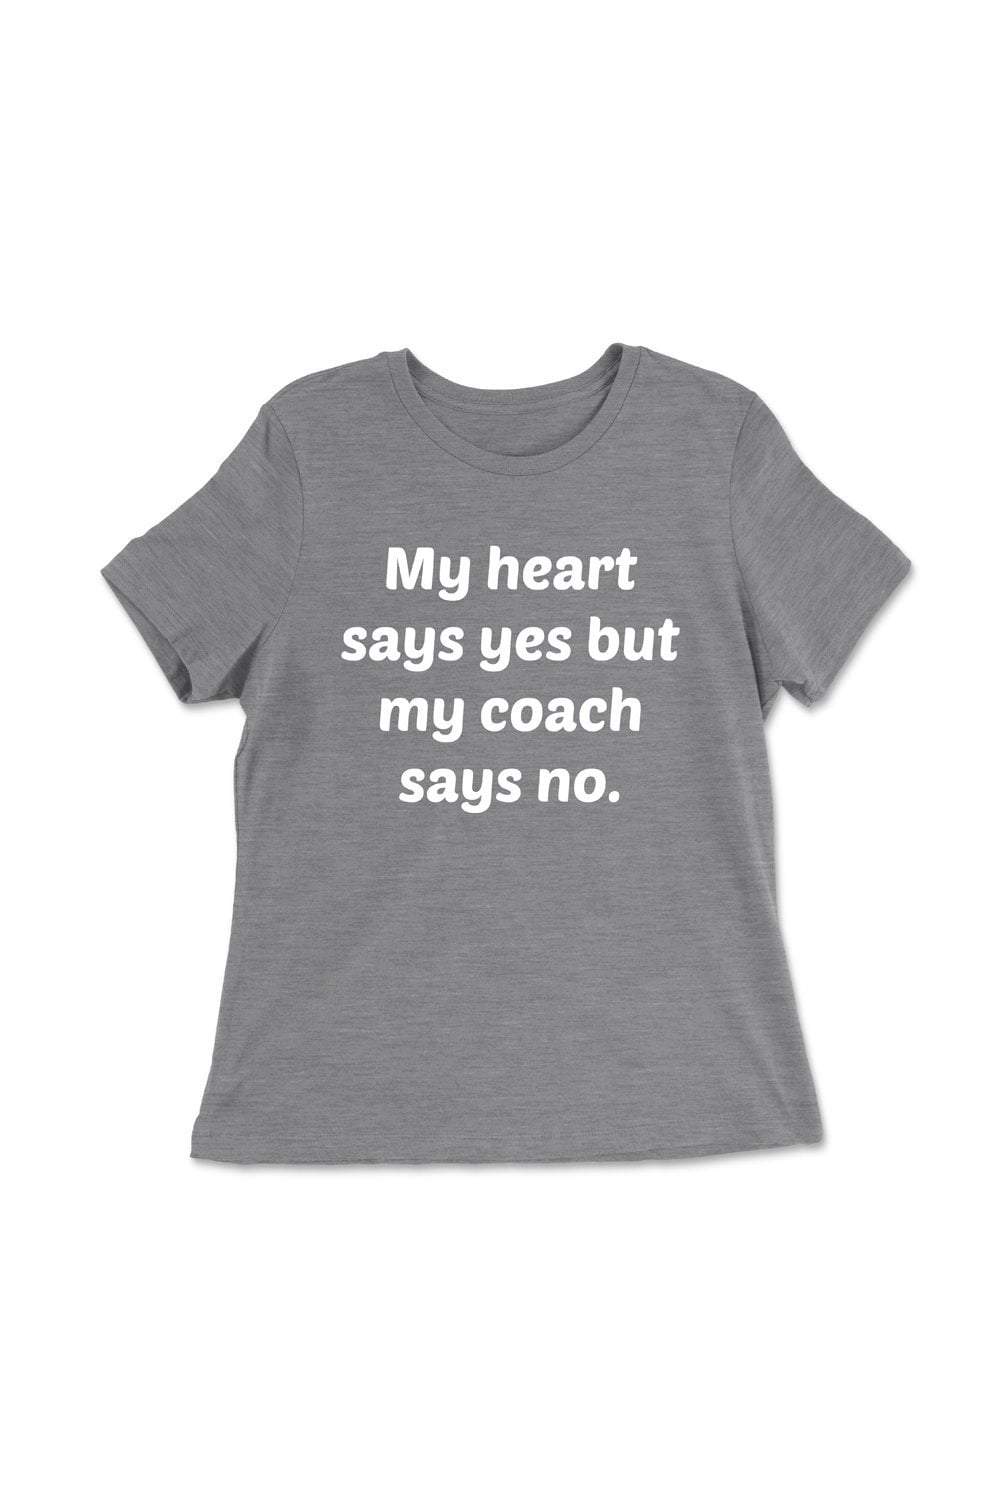 Sarah Marie Design Studio Women's Tee My heart says yes but my coach says no. Women's T-shirt